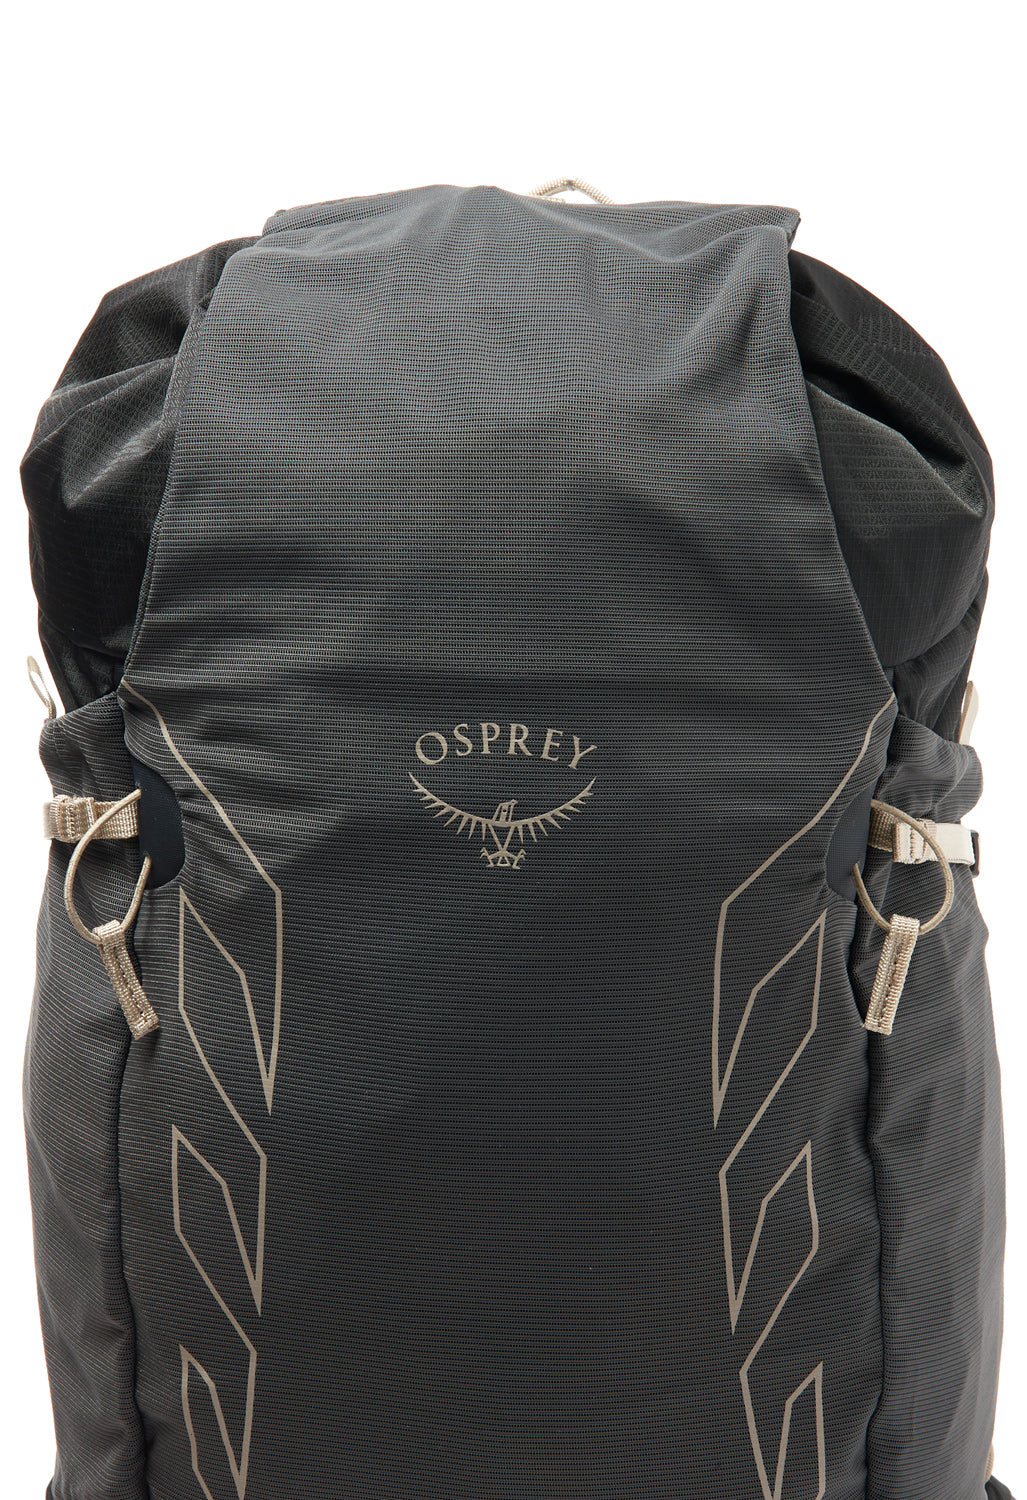 Osprey Tempest Velocity 30 - Dark Charcoal / Chiru Tan